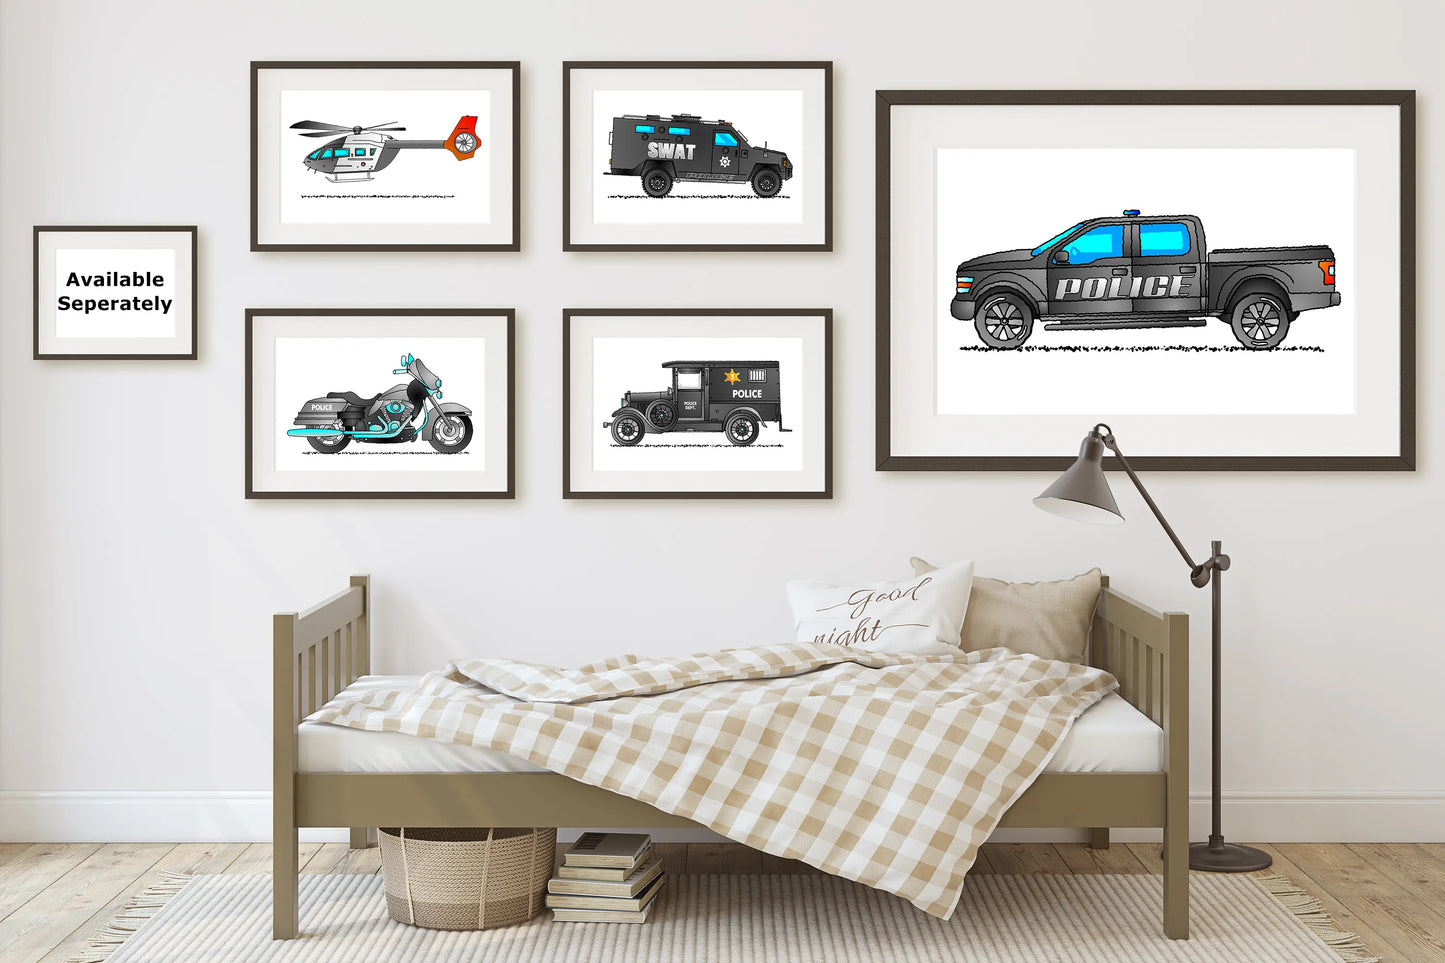 SWAT Truck Print. Police Car Illustration. Home Decor Digital Art E108